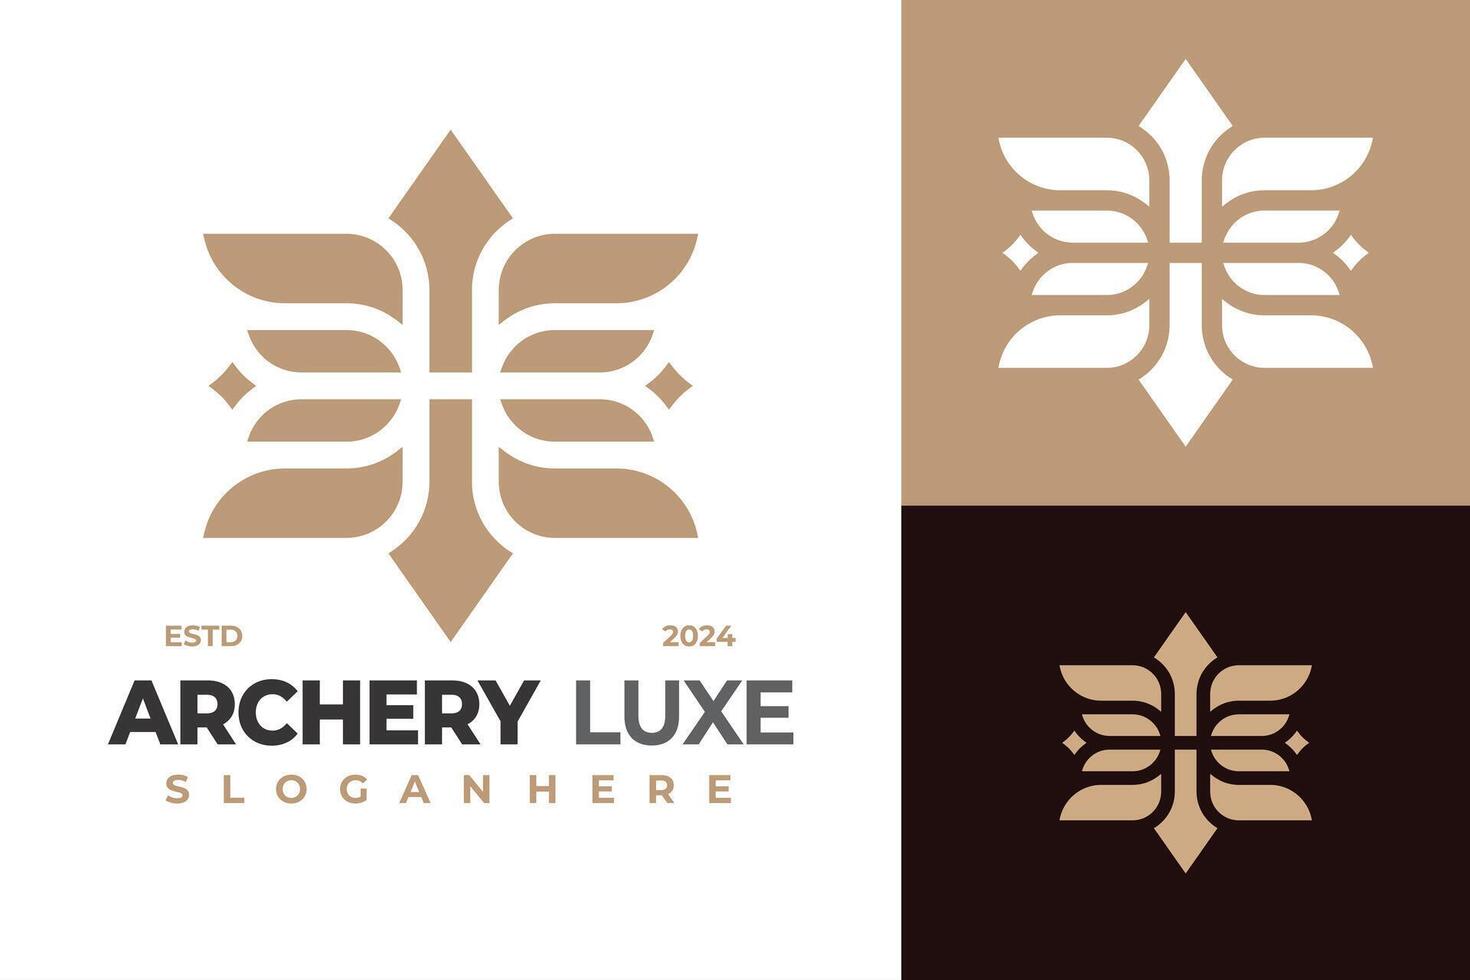 Letter H Archery Wing logo design symbol icon illustration vector